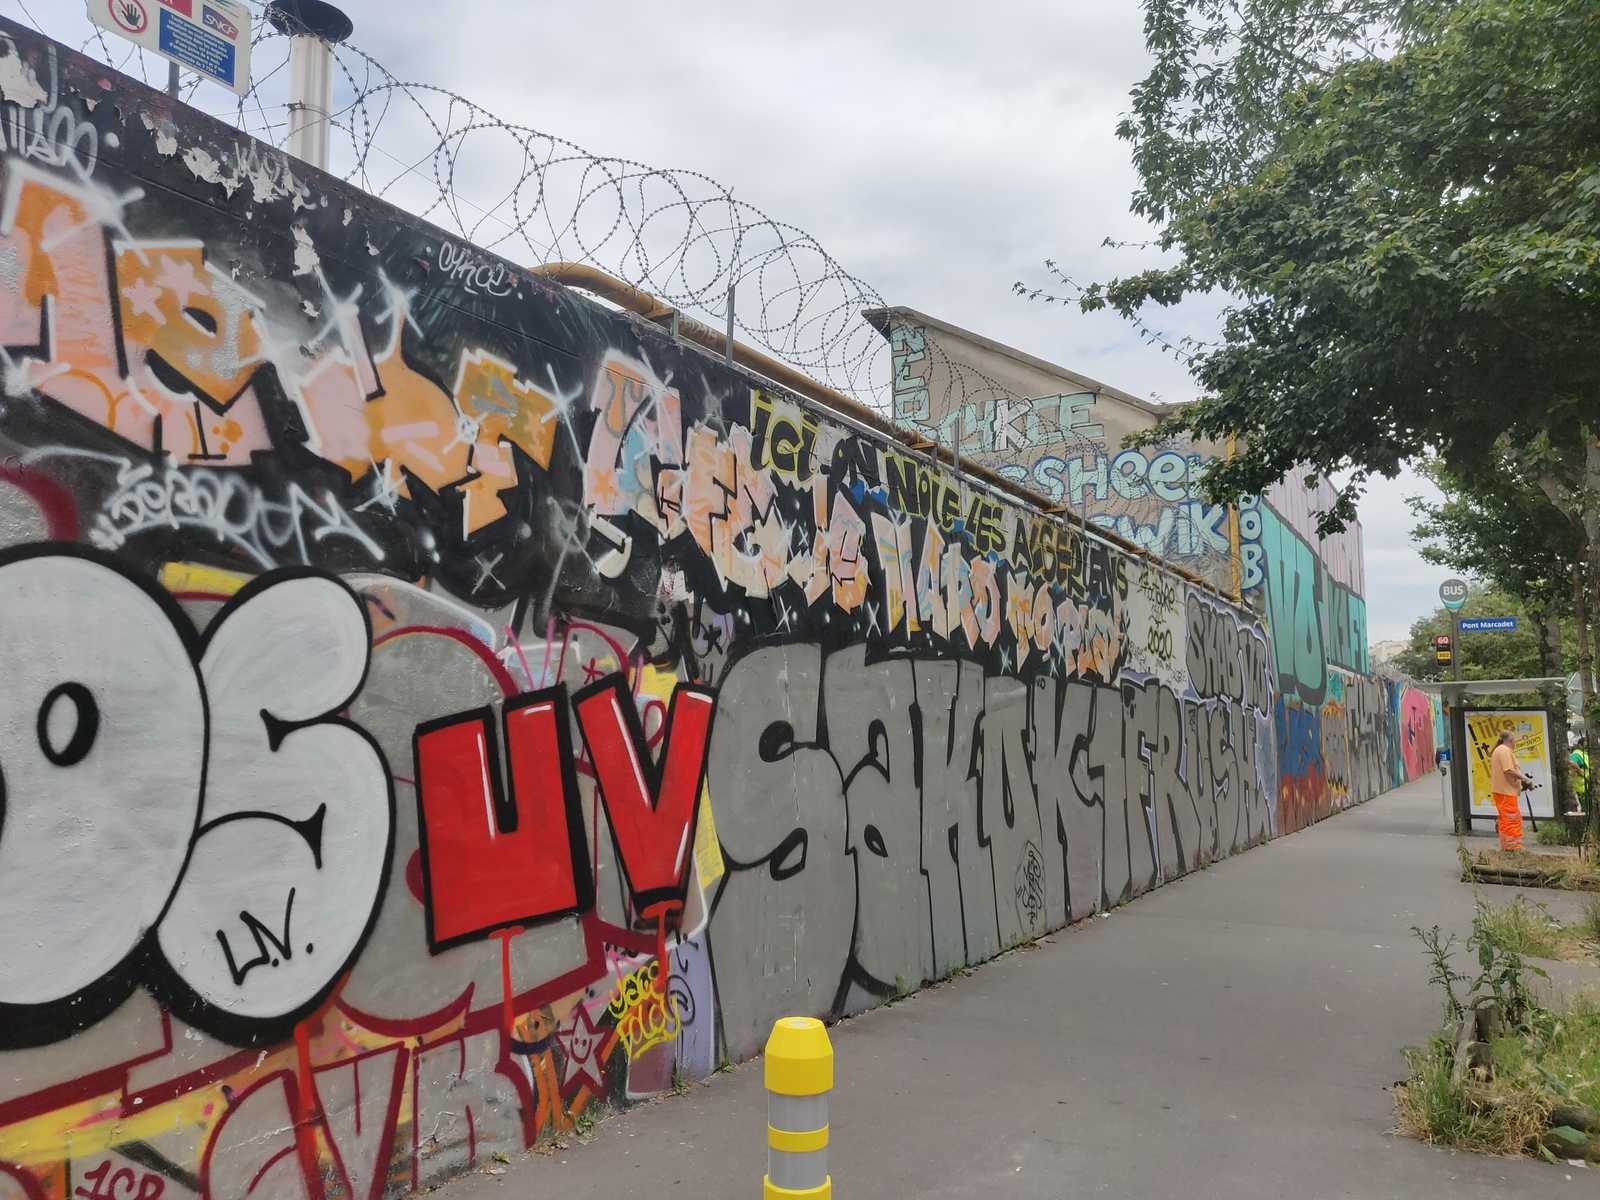 Fußgängerweg entlang der Graffiti Hall of Fame von Paris, urbane Kunst, urbanität, rotes UV-Graffiti, Chrom-Graffiti SAKO, K1FR, RUSH, Großes Roll-up auf Höhe Bushhaltestelle VO-Graffiti Paris Nord, Urbane Kultur Frankreich